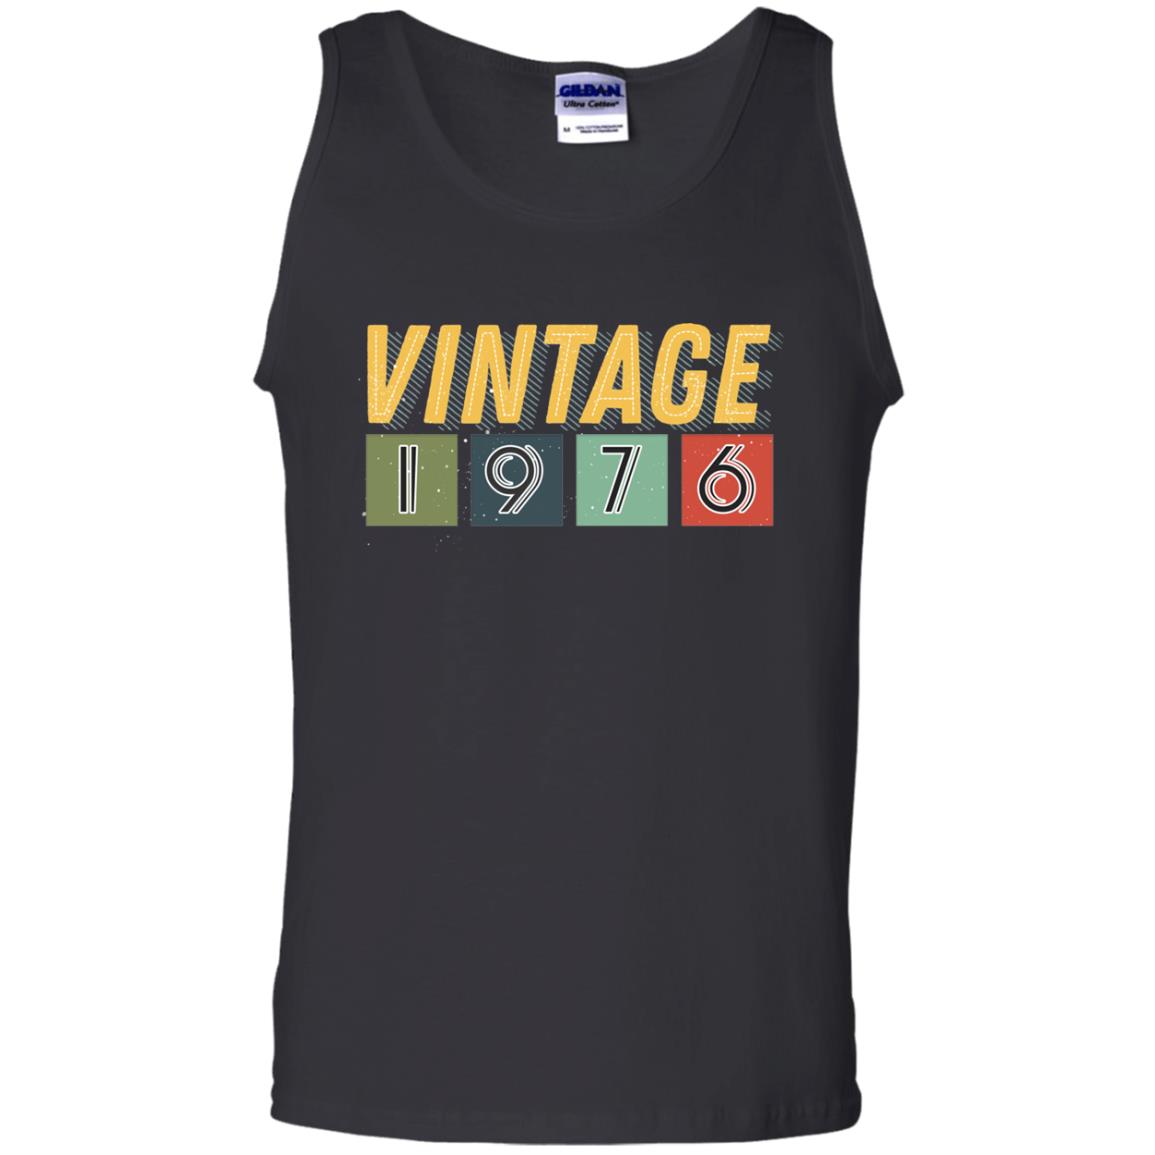 Vintage 1976 42th Birthday Gift Shirt For Mens Or WomensG220 Gildan 100% Cotton Tank Top